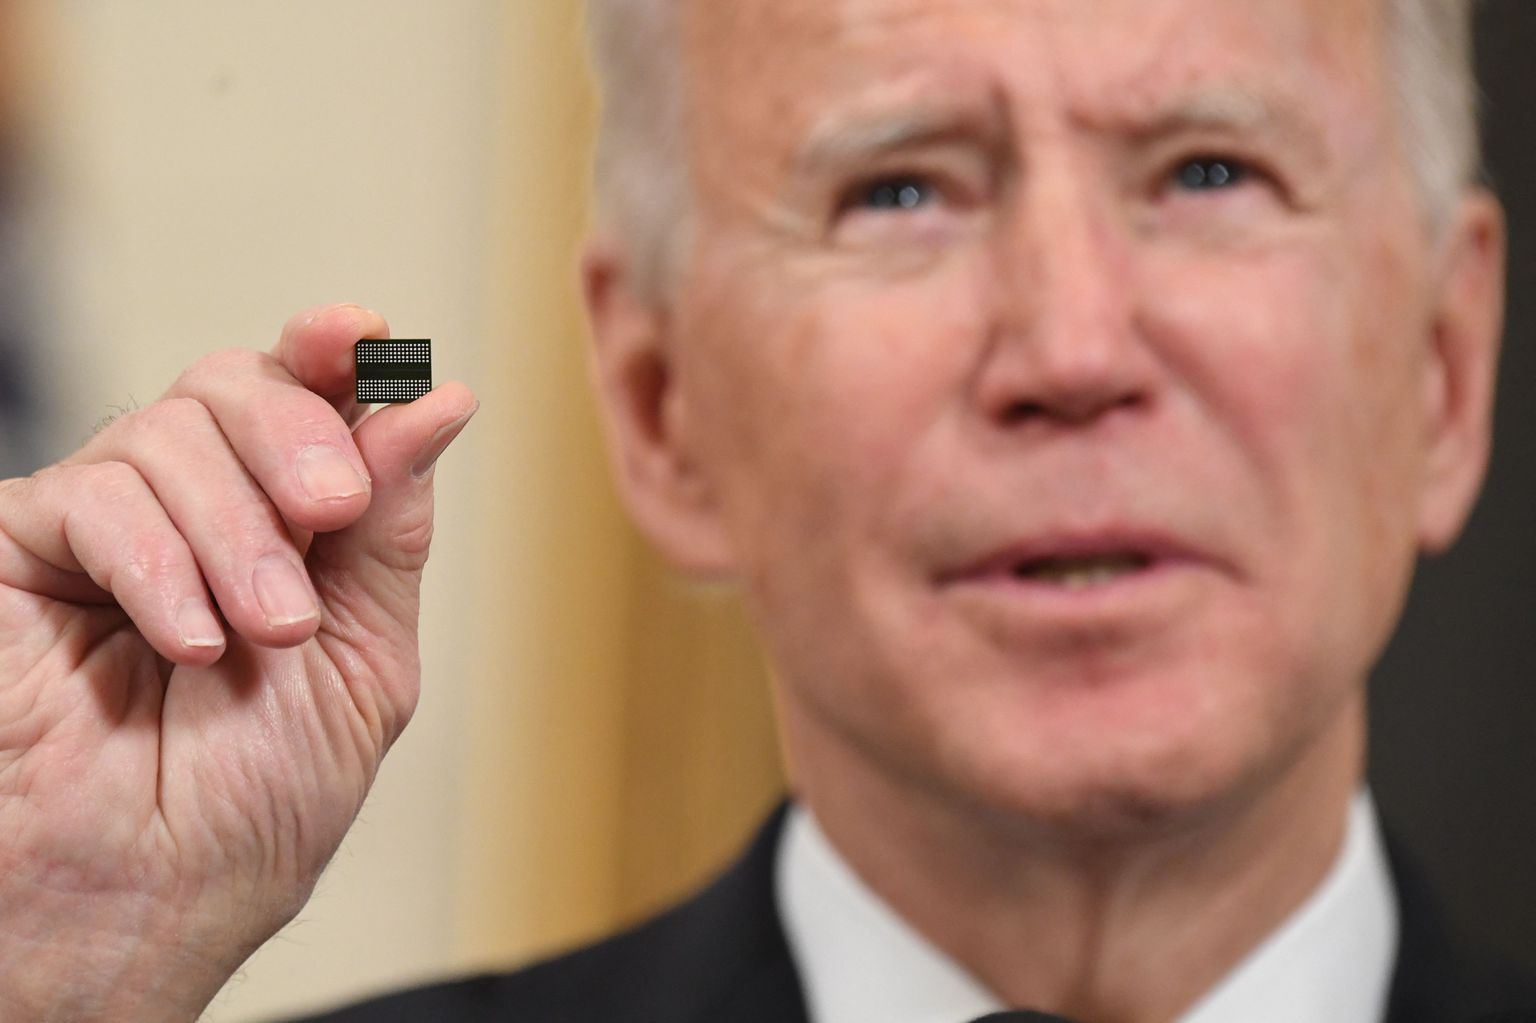 USA president Joe Biden hoidmas mikrokiipi.